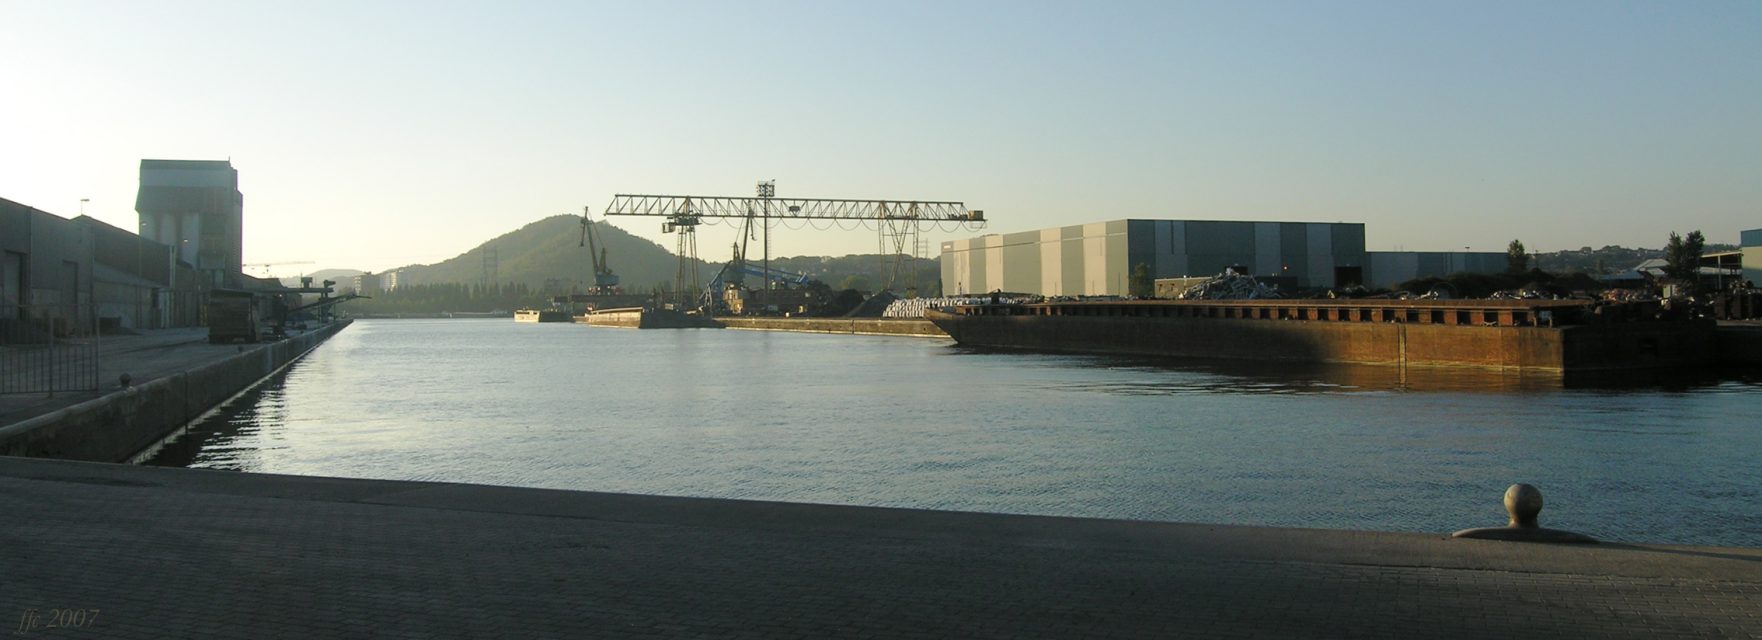 Liege Port authority - Belgium - Wallonia - Trilogiport